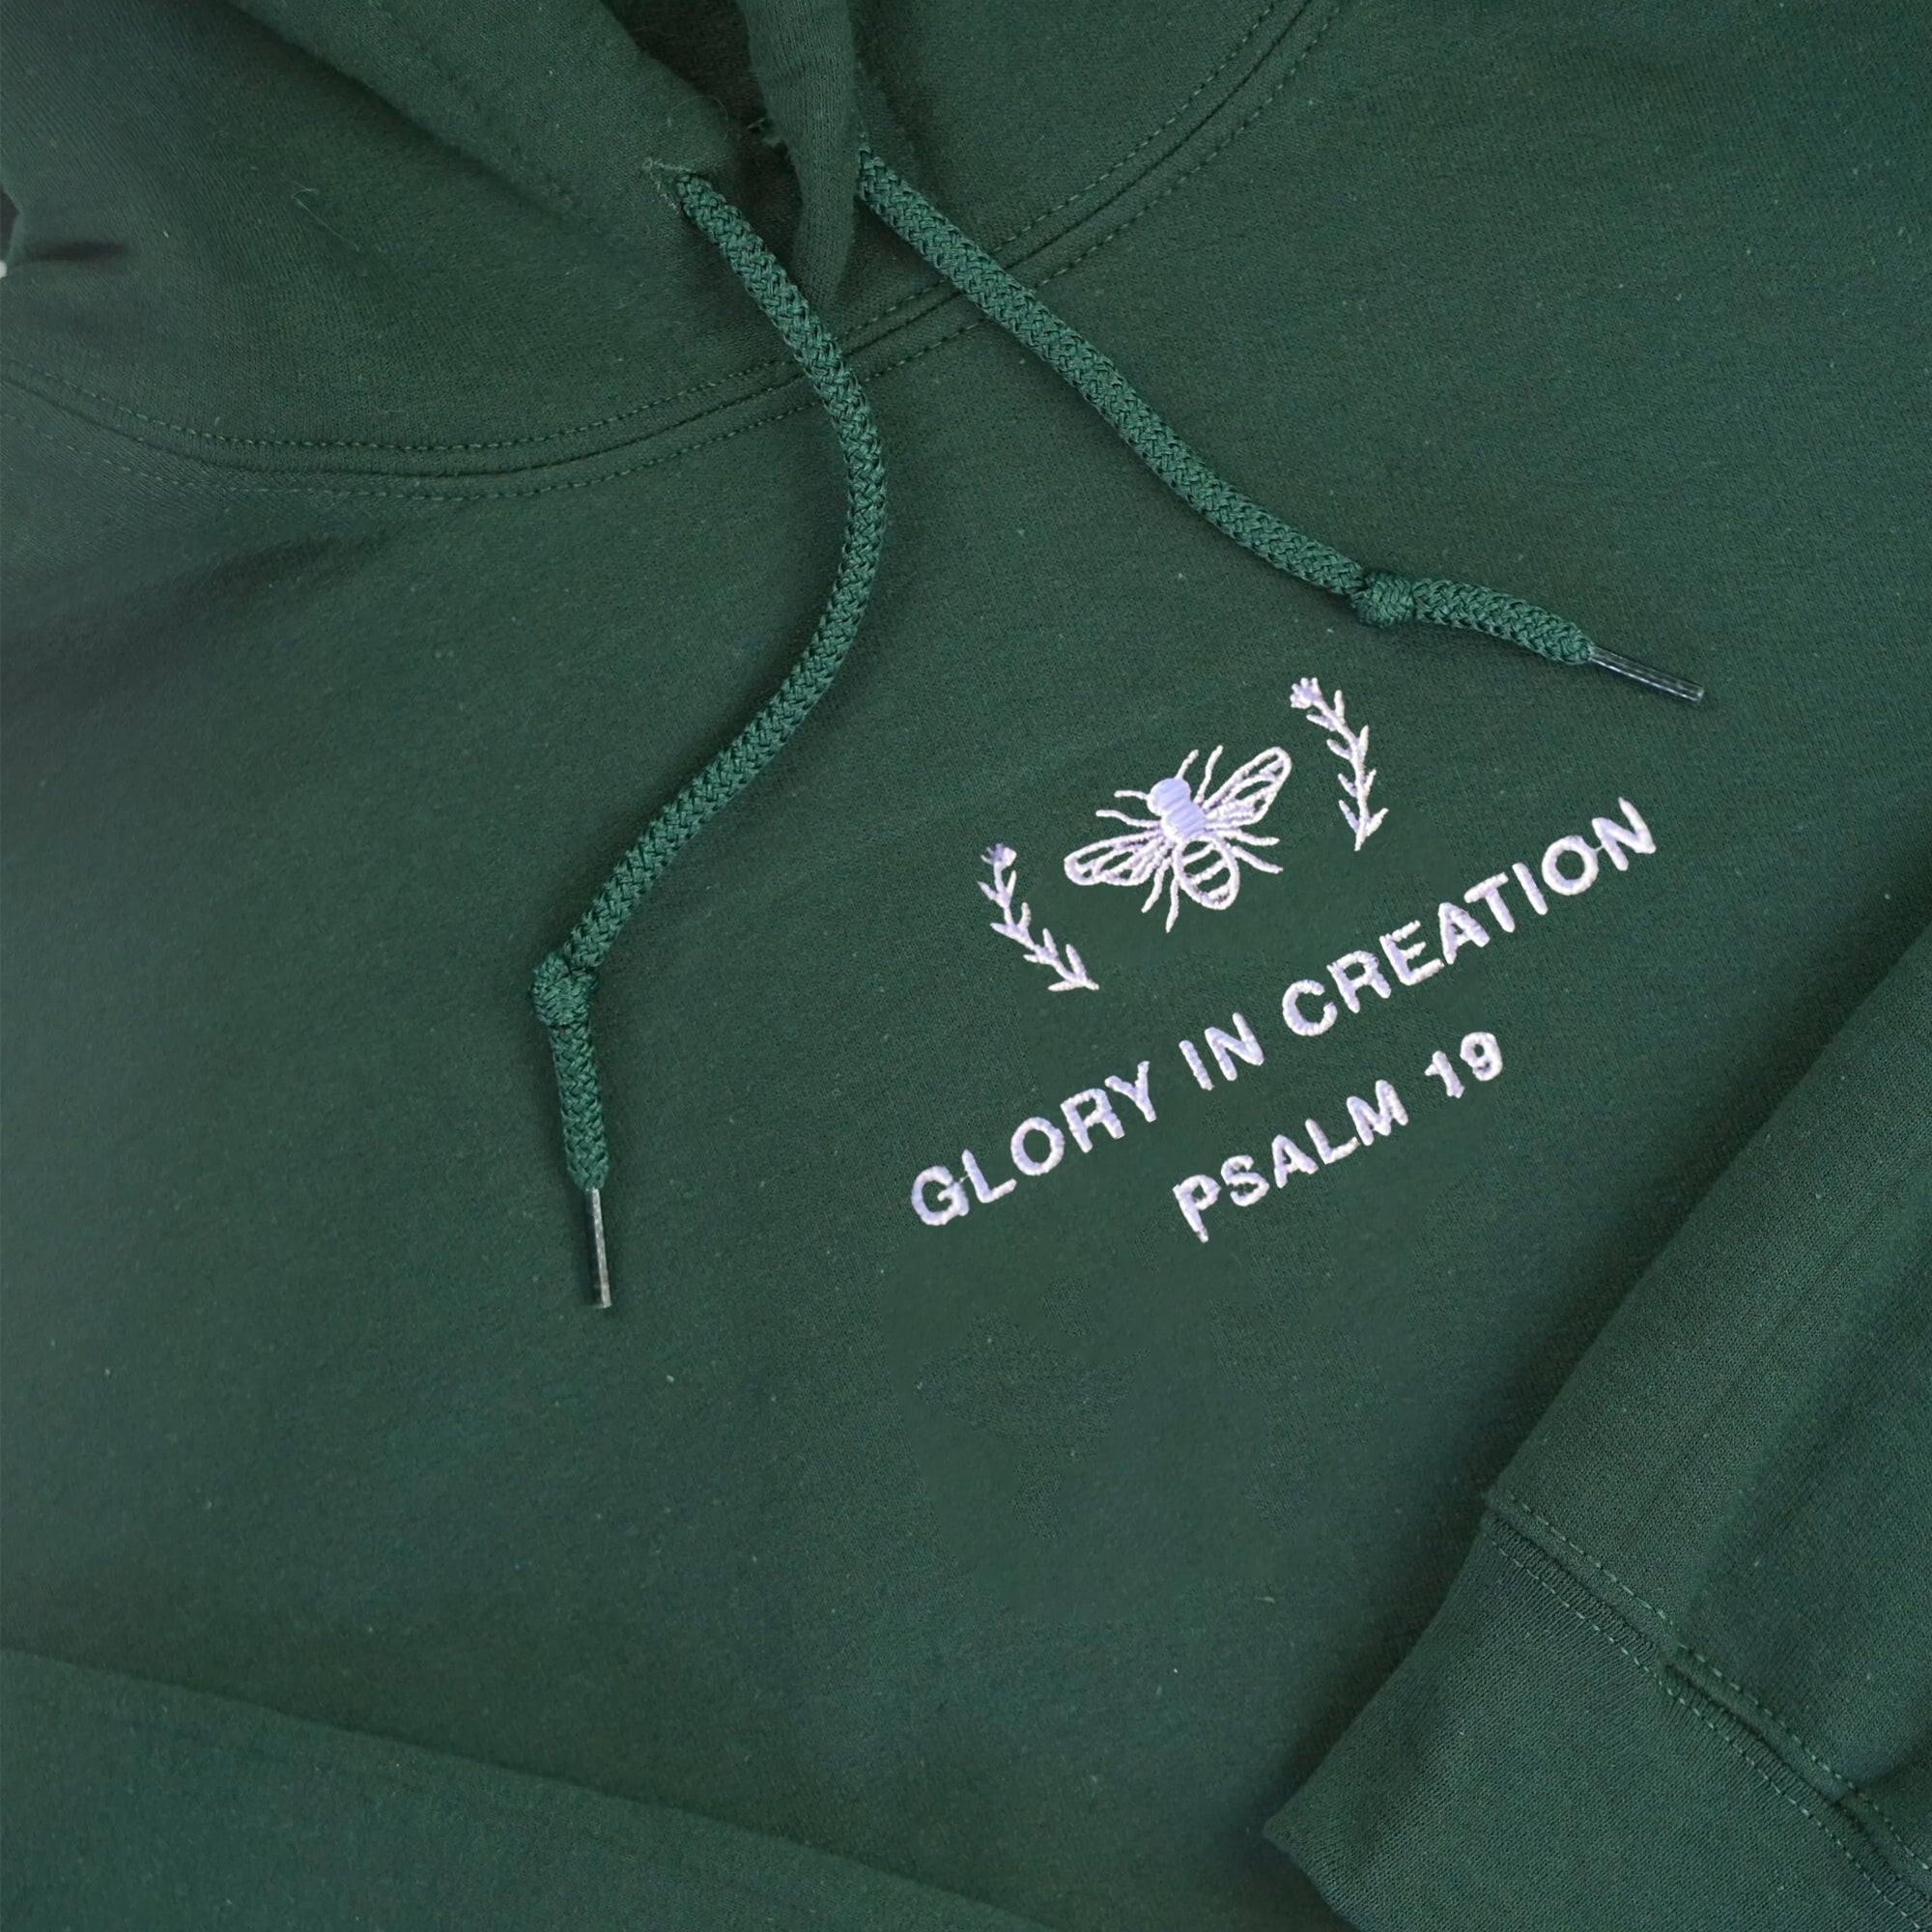 Embroidered Glory in Creation Psalm Christian Sweatshirt, Hoodie